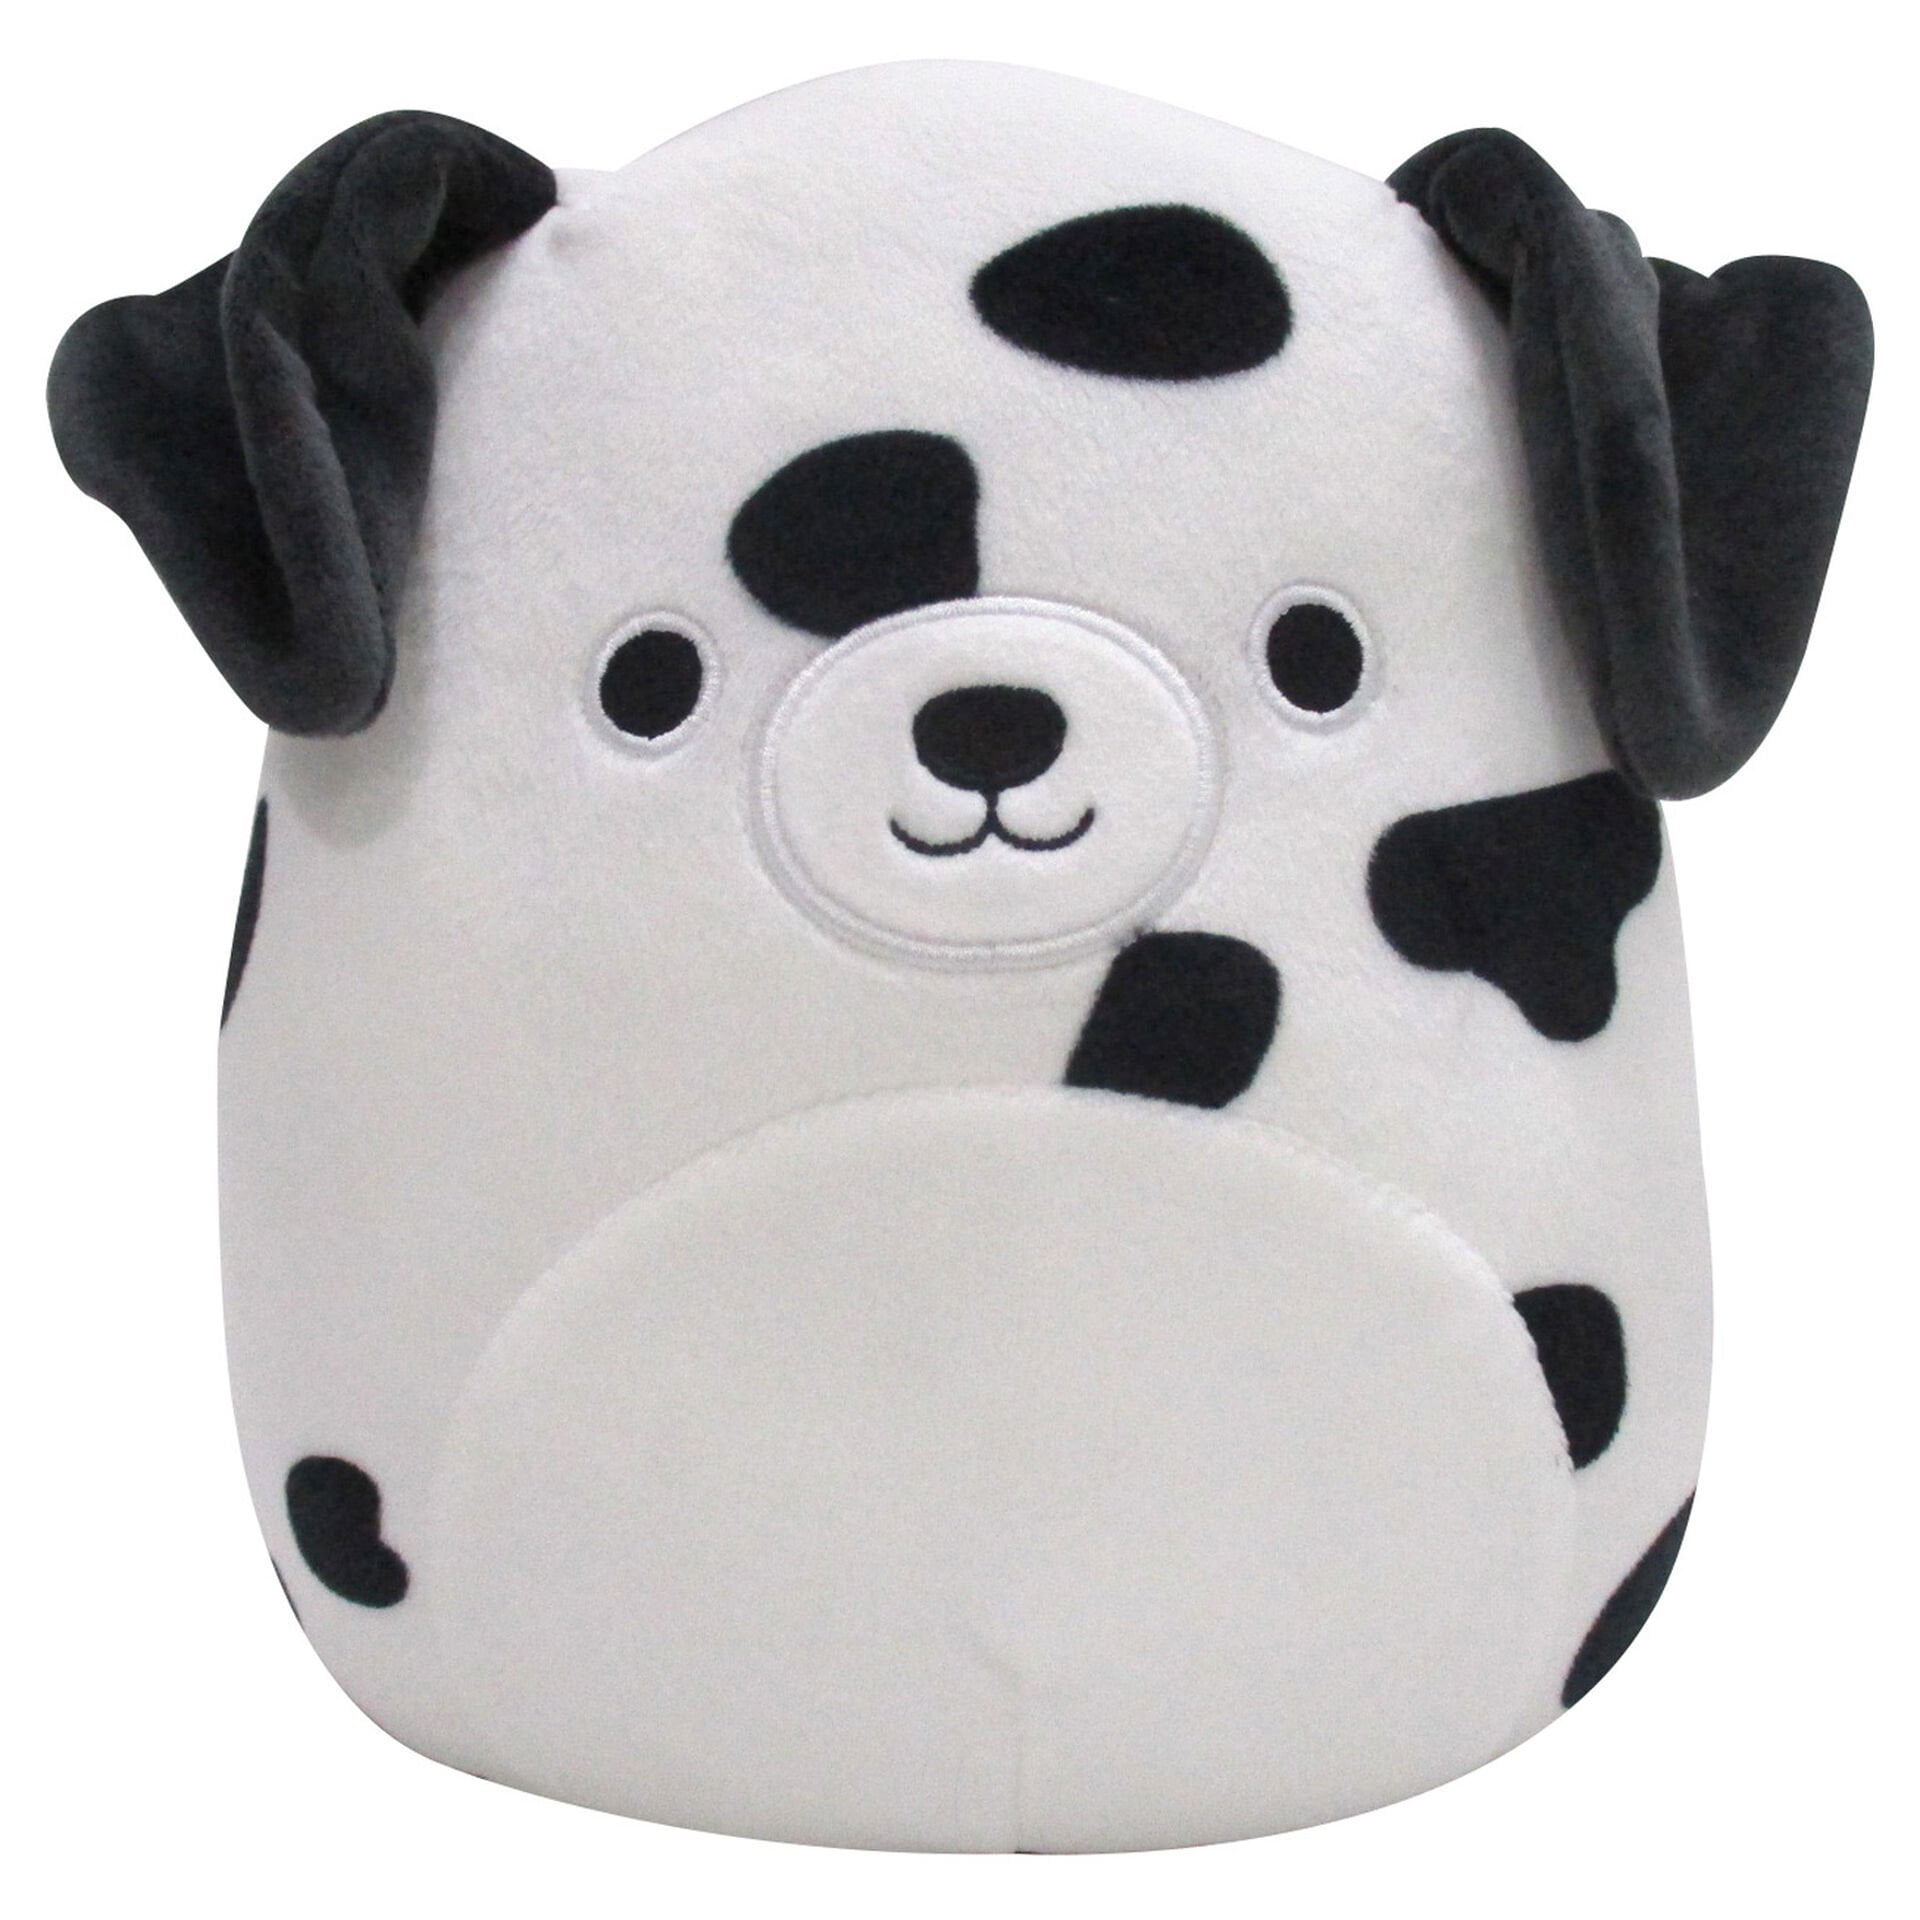 Dustin The Dalmatian Dog KellyToy 8" New with Tag Squishmallow Plush Doll 